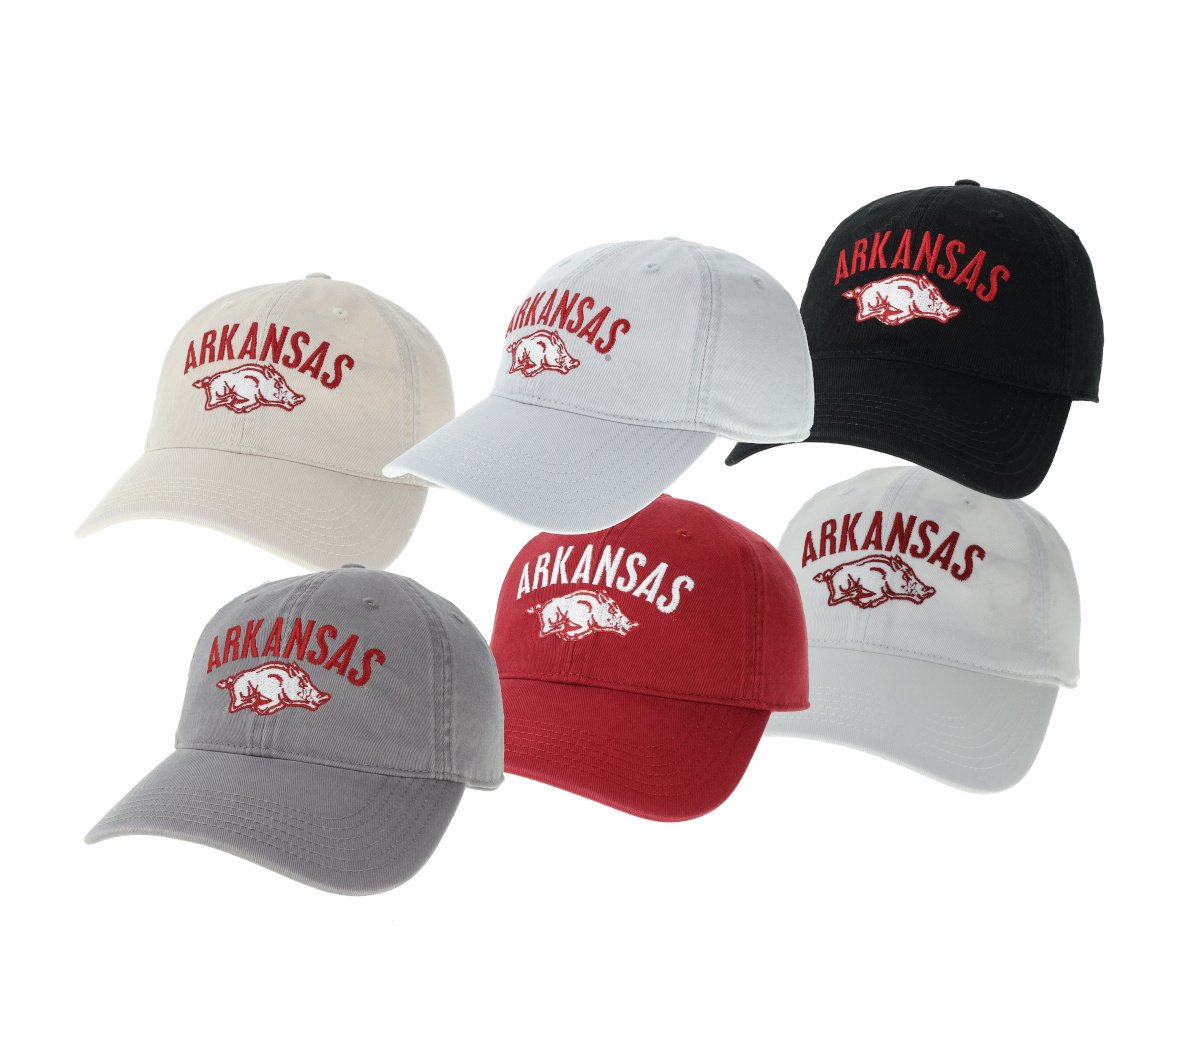 L2-League / Legacy Arkansas Razorback Arched Basic Twill Hat